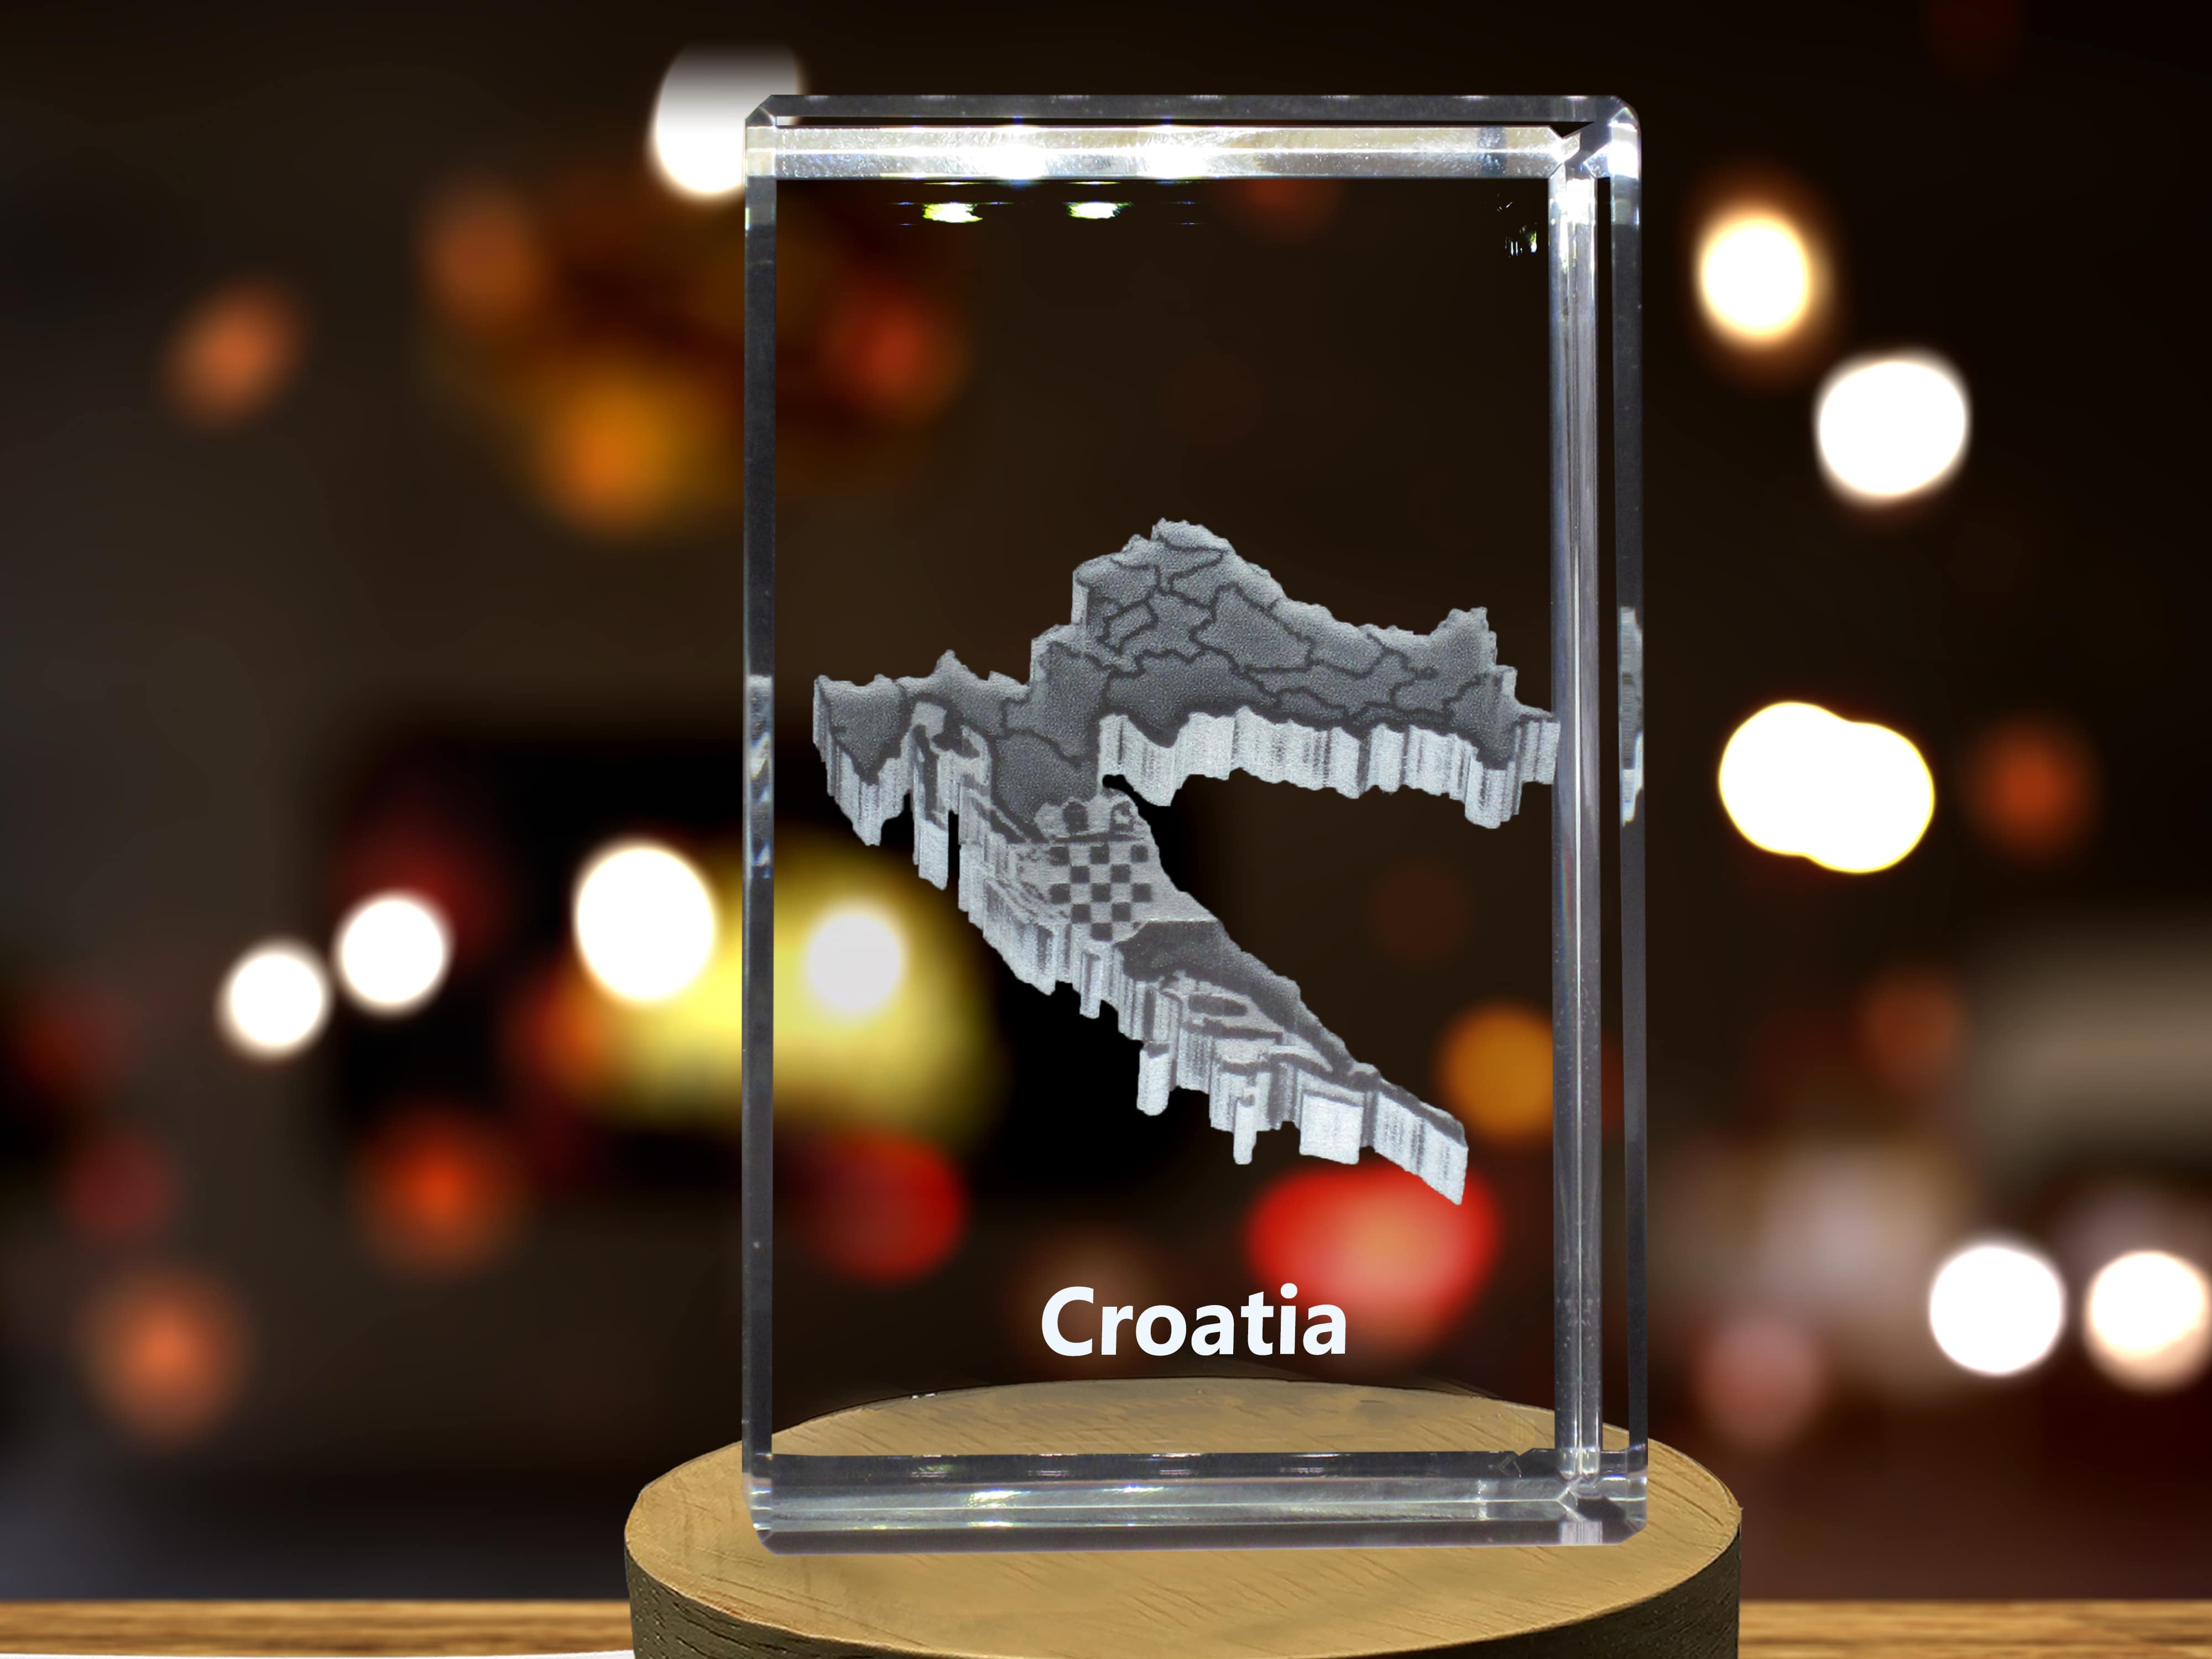 Croatia 3D Engraved Crystal 3D Engraved Crystal Keepsake/Gift/Decor/Collectible/Souvenir A&B Crystal Collection